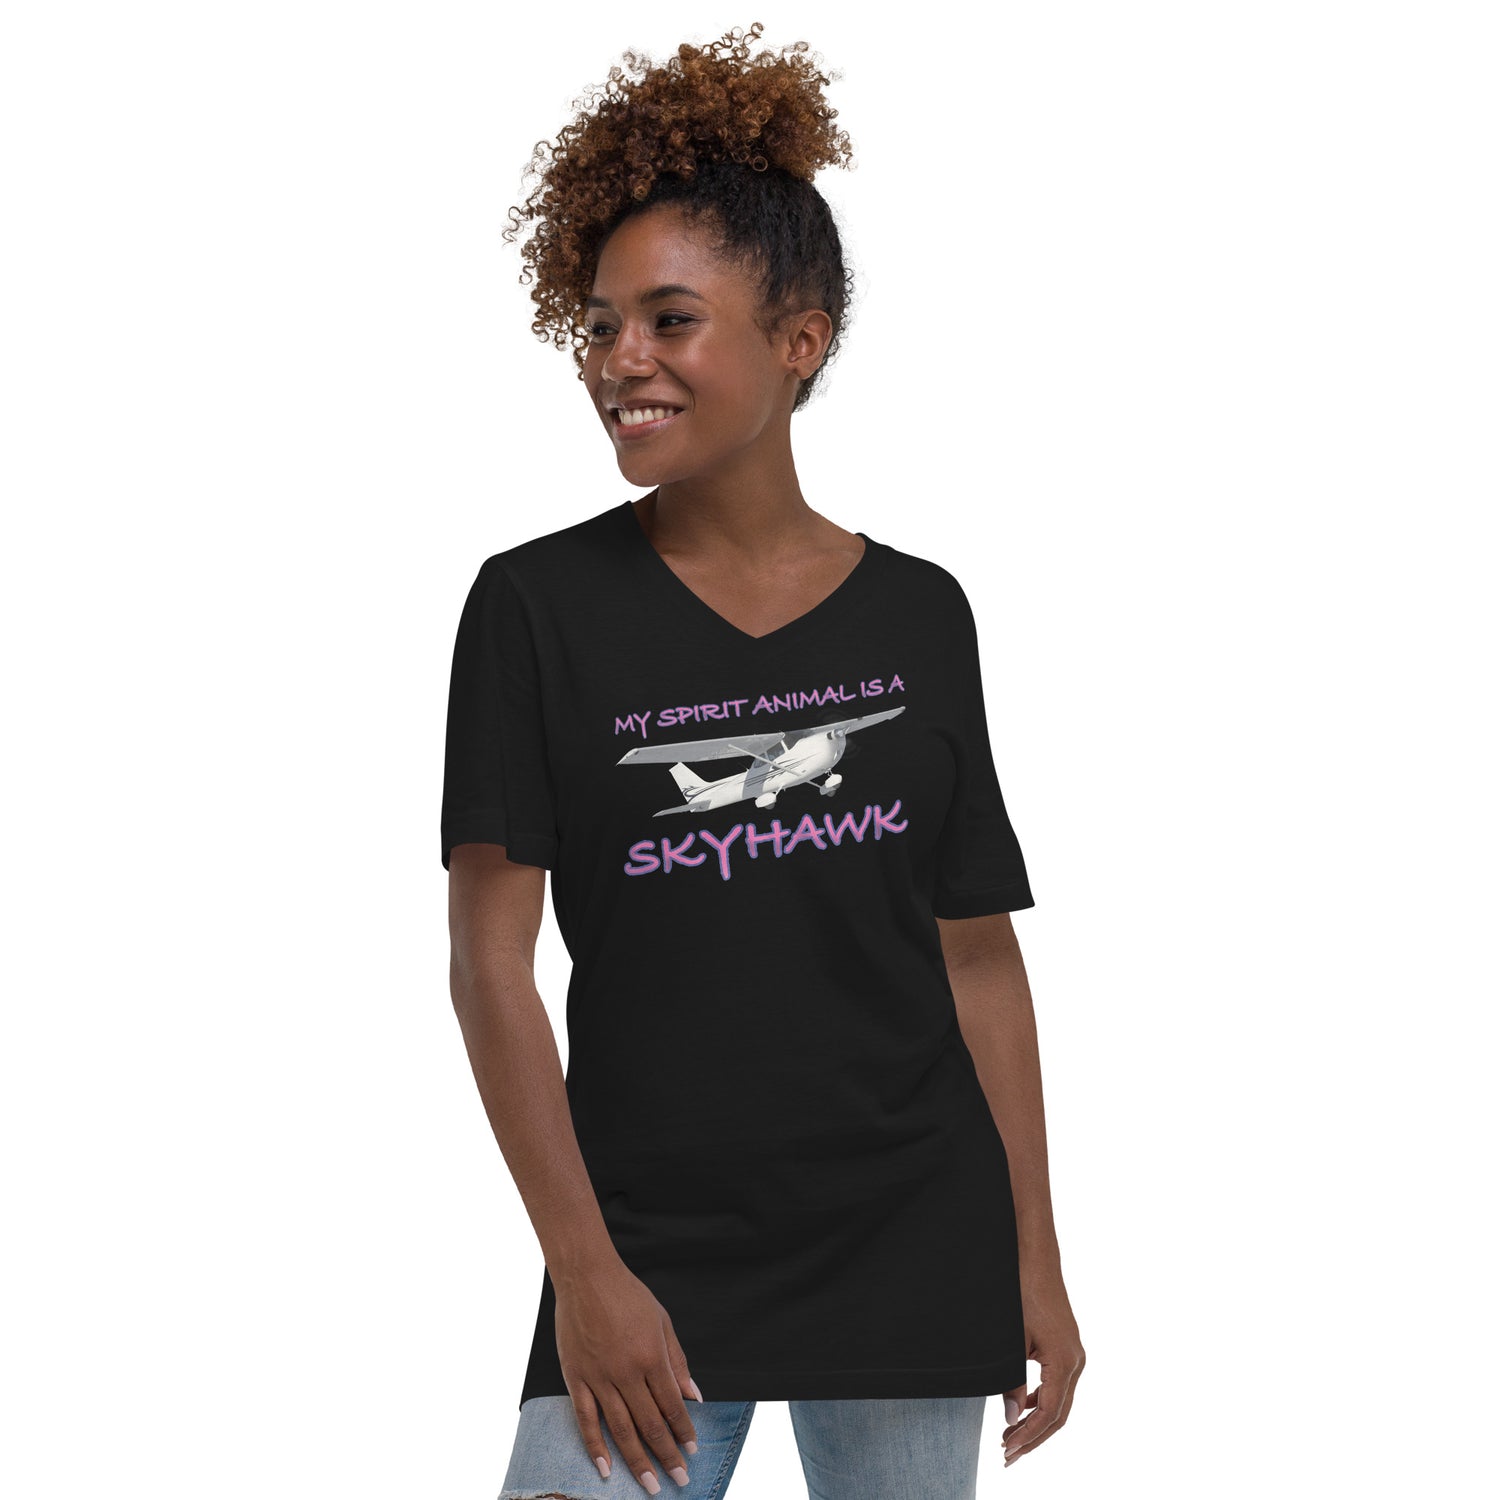 My Spirit Animal is a Skyhawk - Short Sleeve V-Neck T-Shirt